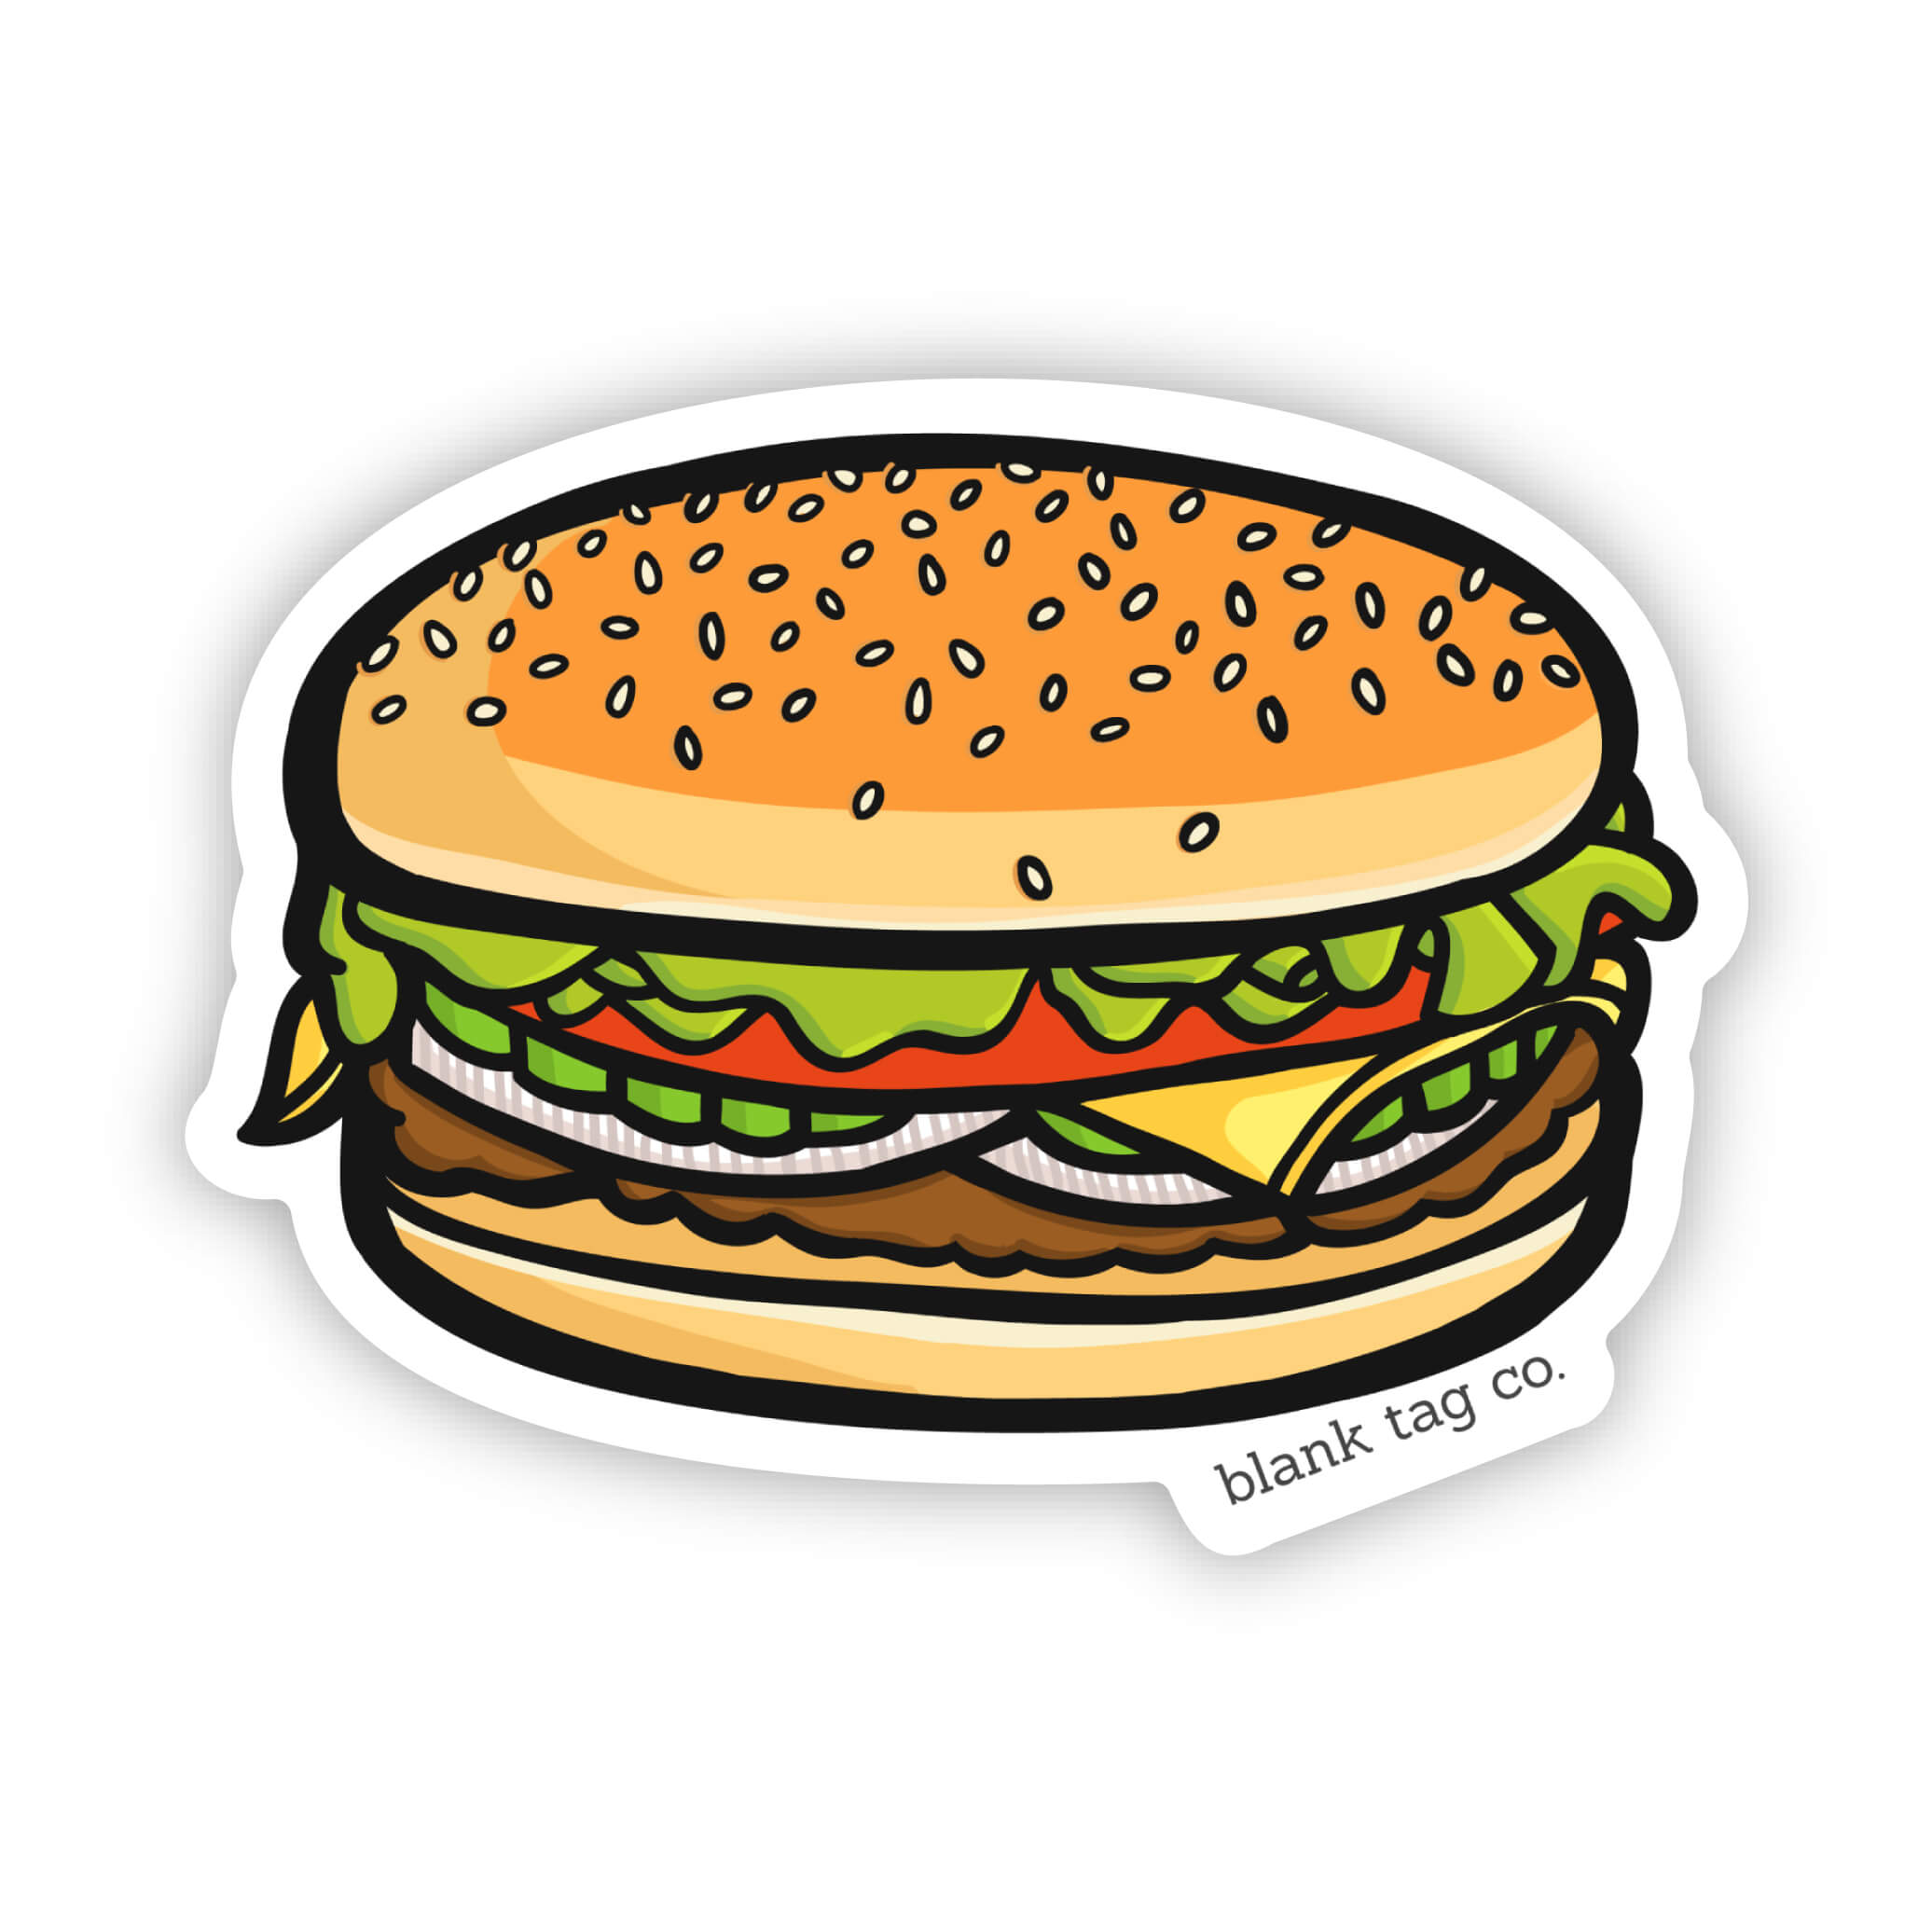 The Cheeseburger Sticker